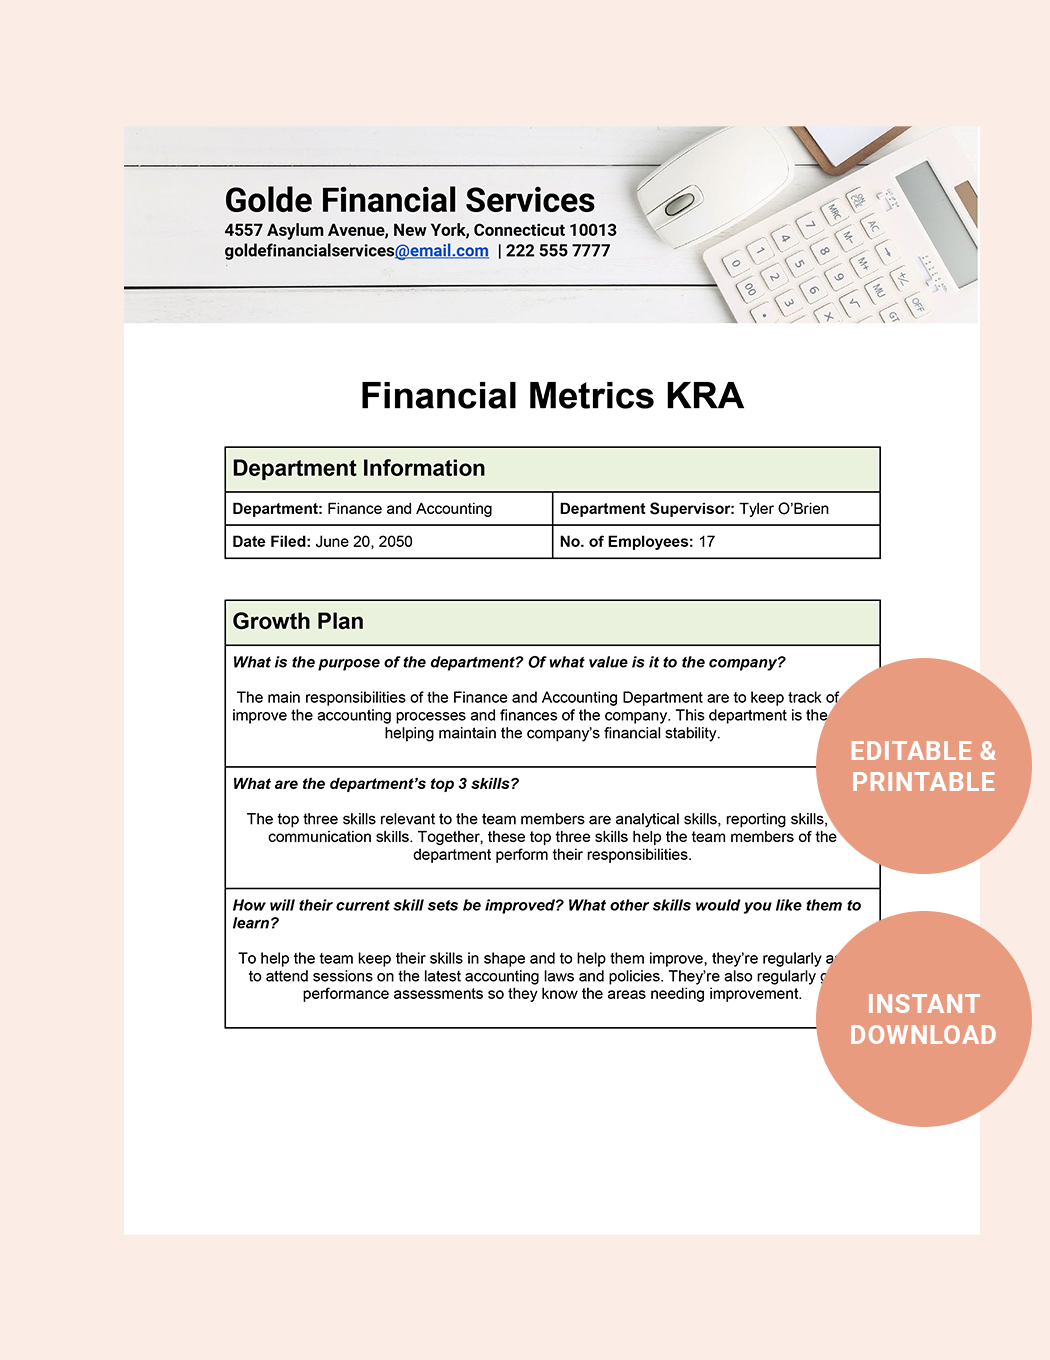 Financial Metrics KRA Template in Word, Google Docs